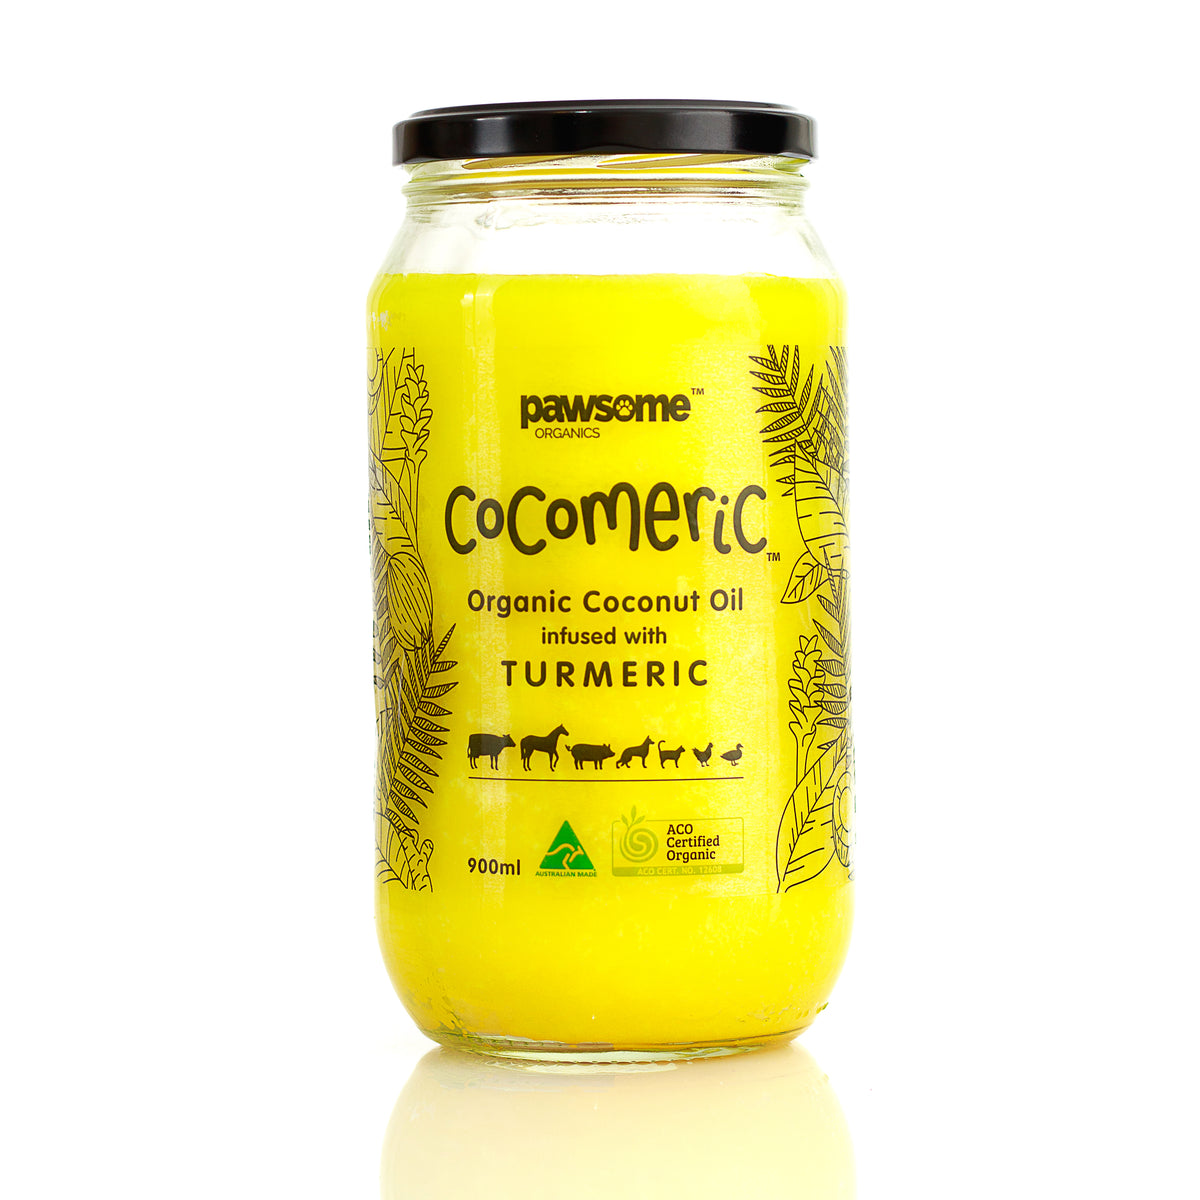 Pawsome Organics Cocomeric Coconut Oil With Turmeric